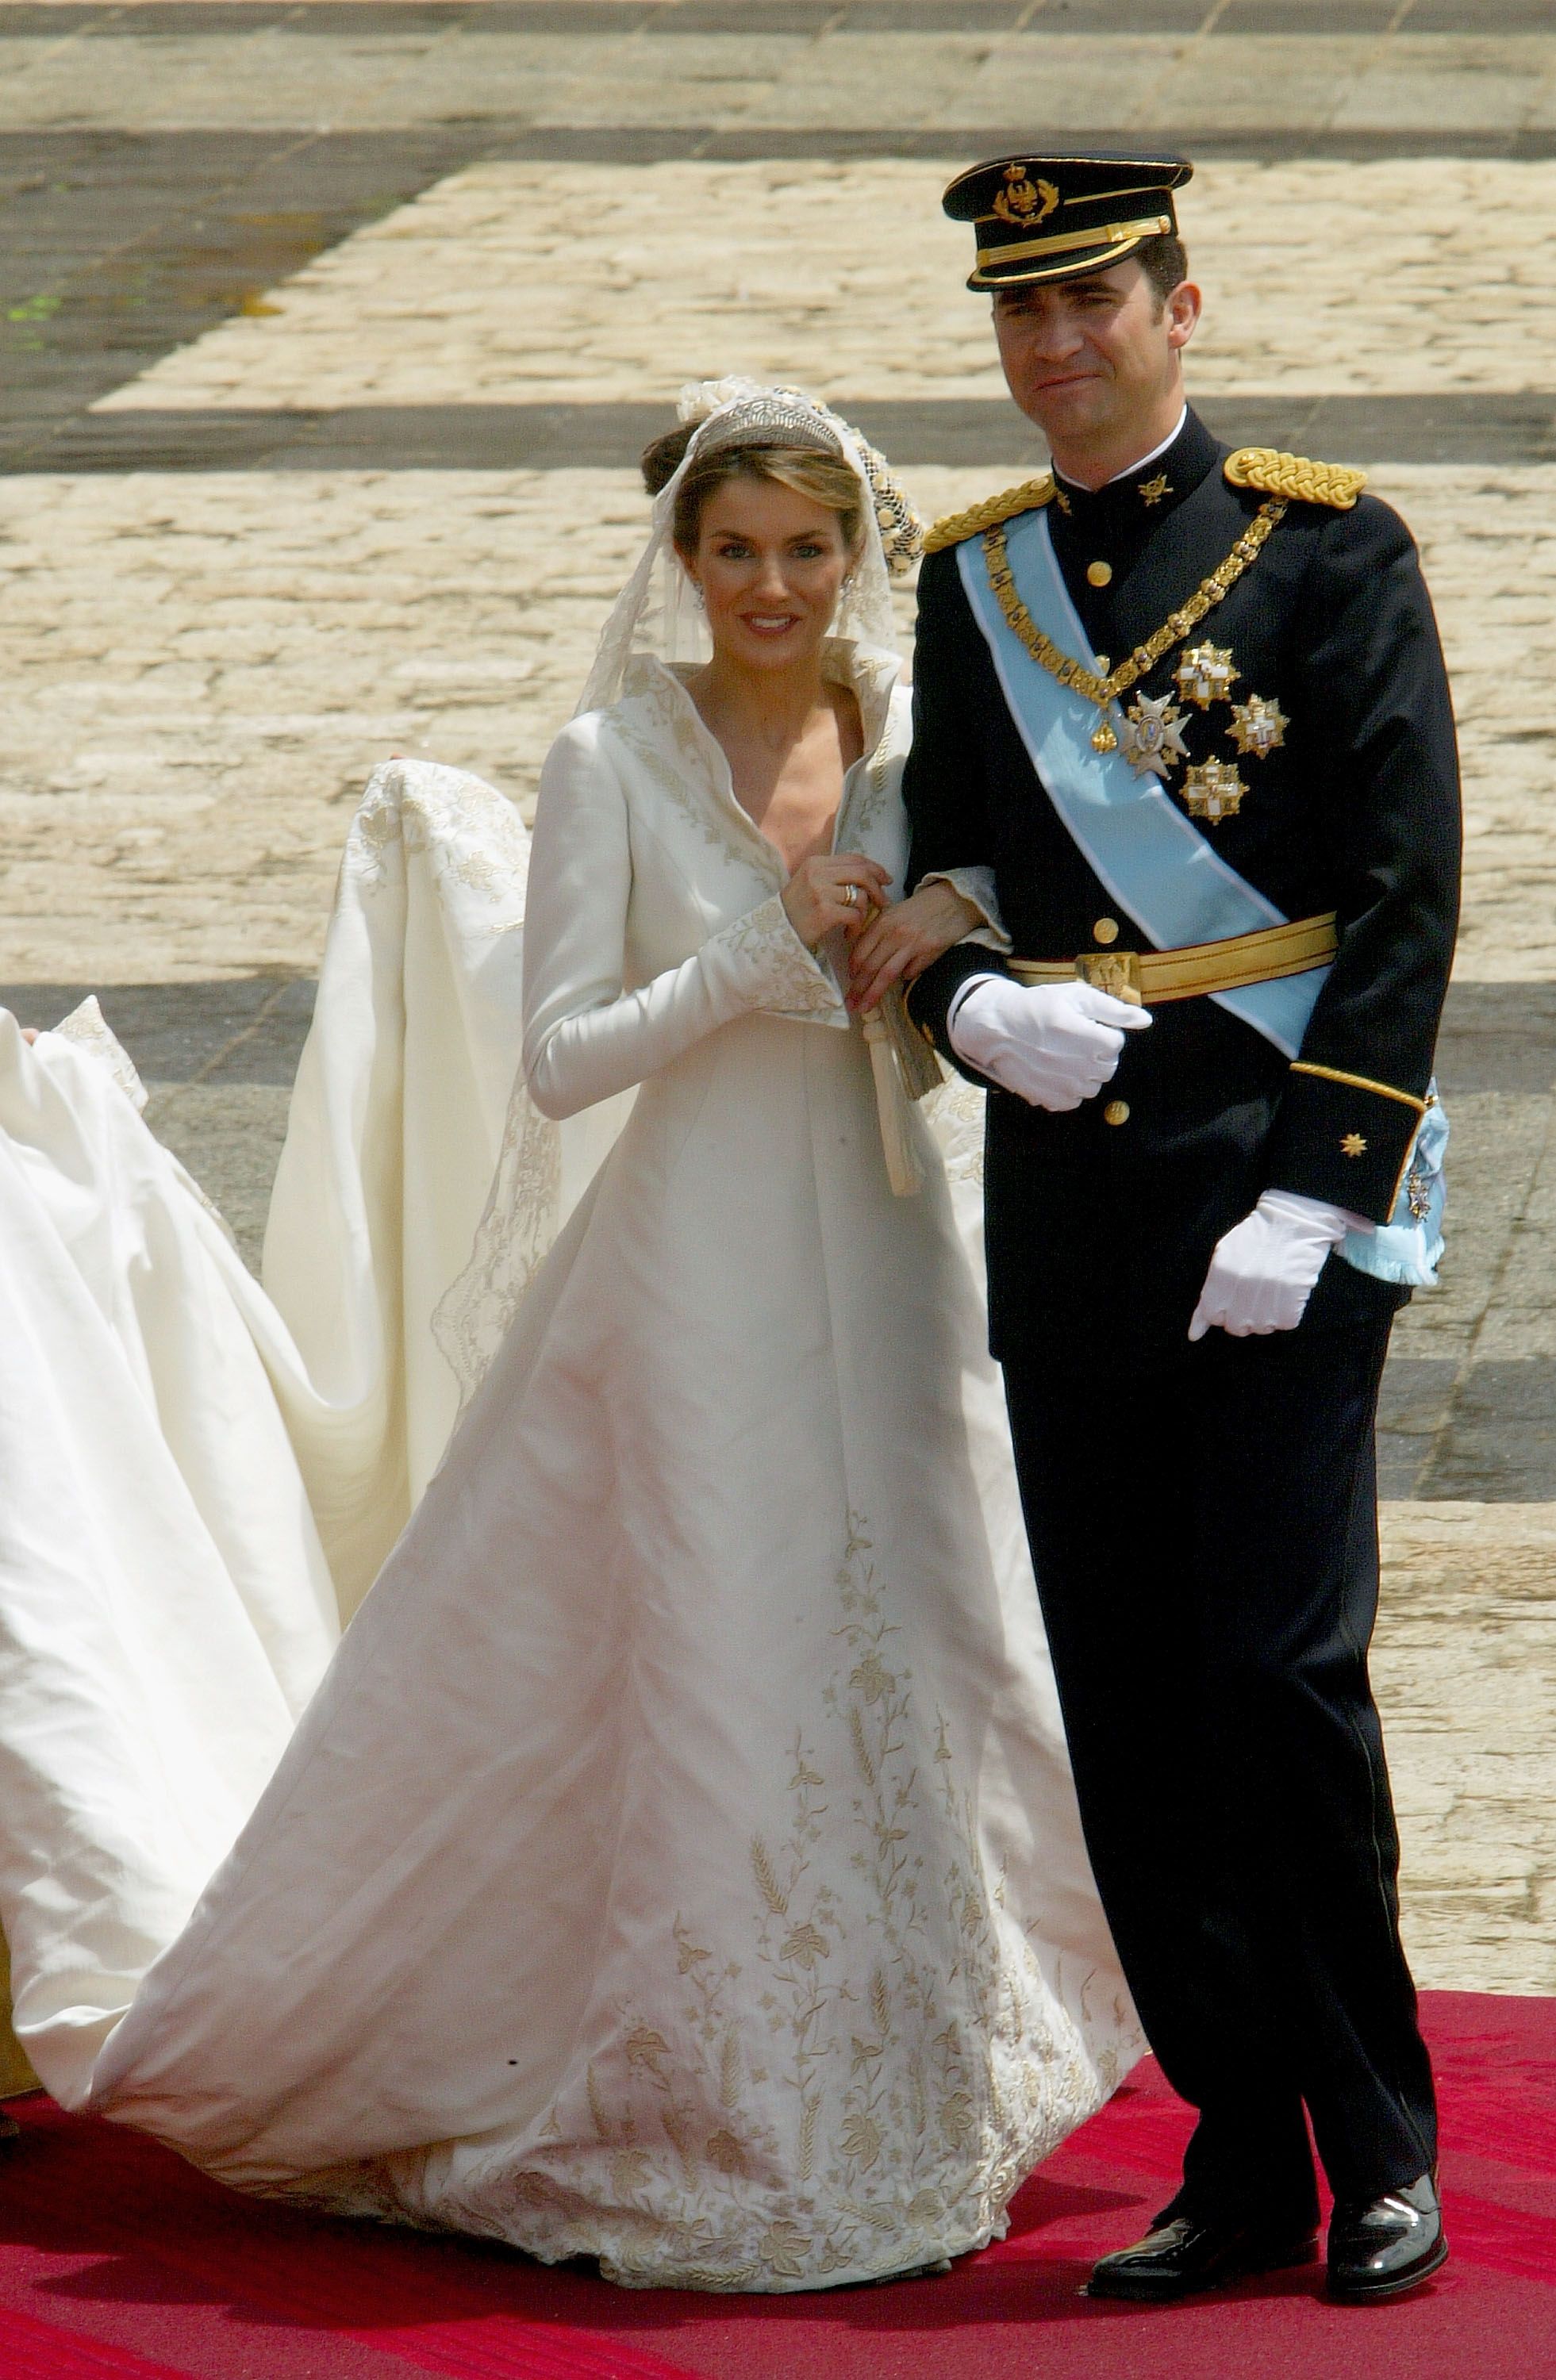 Ombre Wedding Veil Trend - Ways to Customize Your Wedding Dress